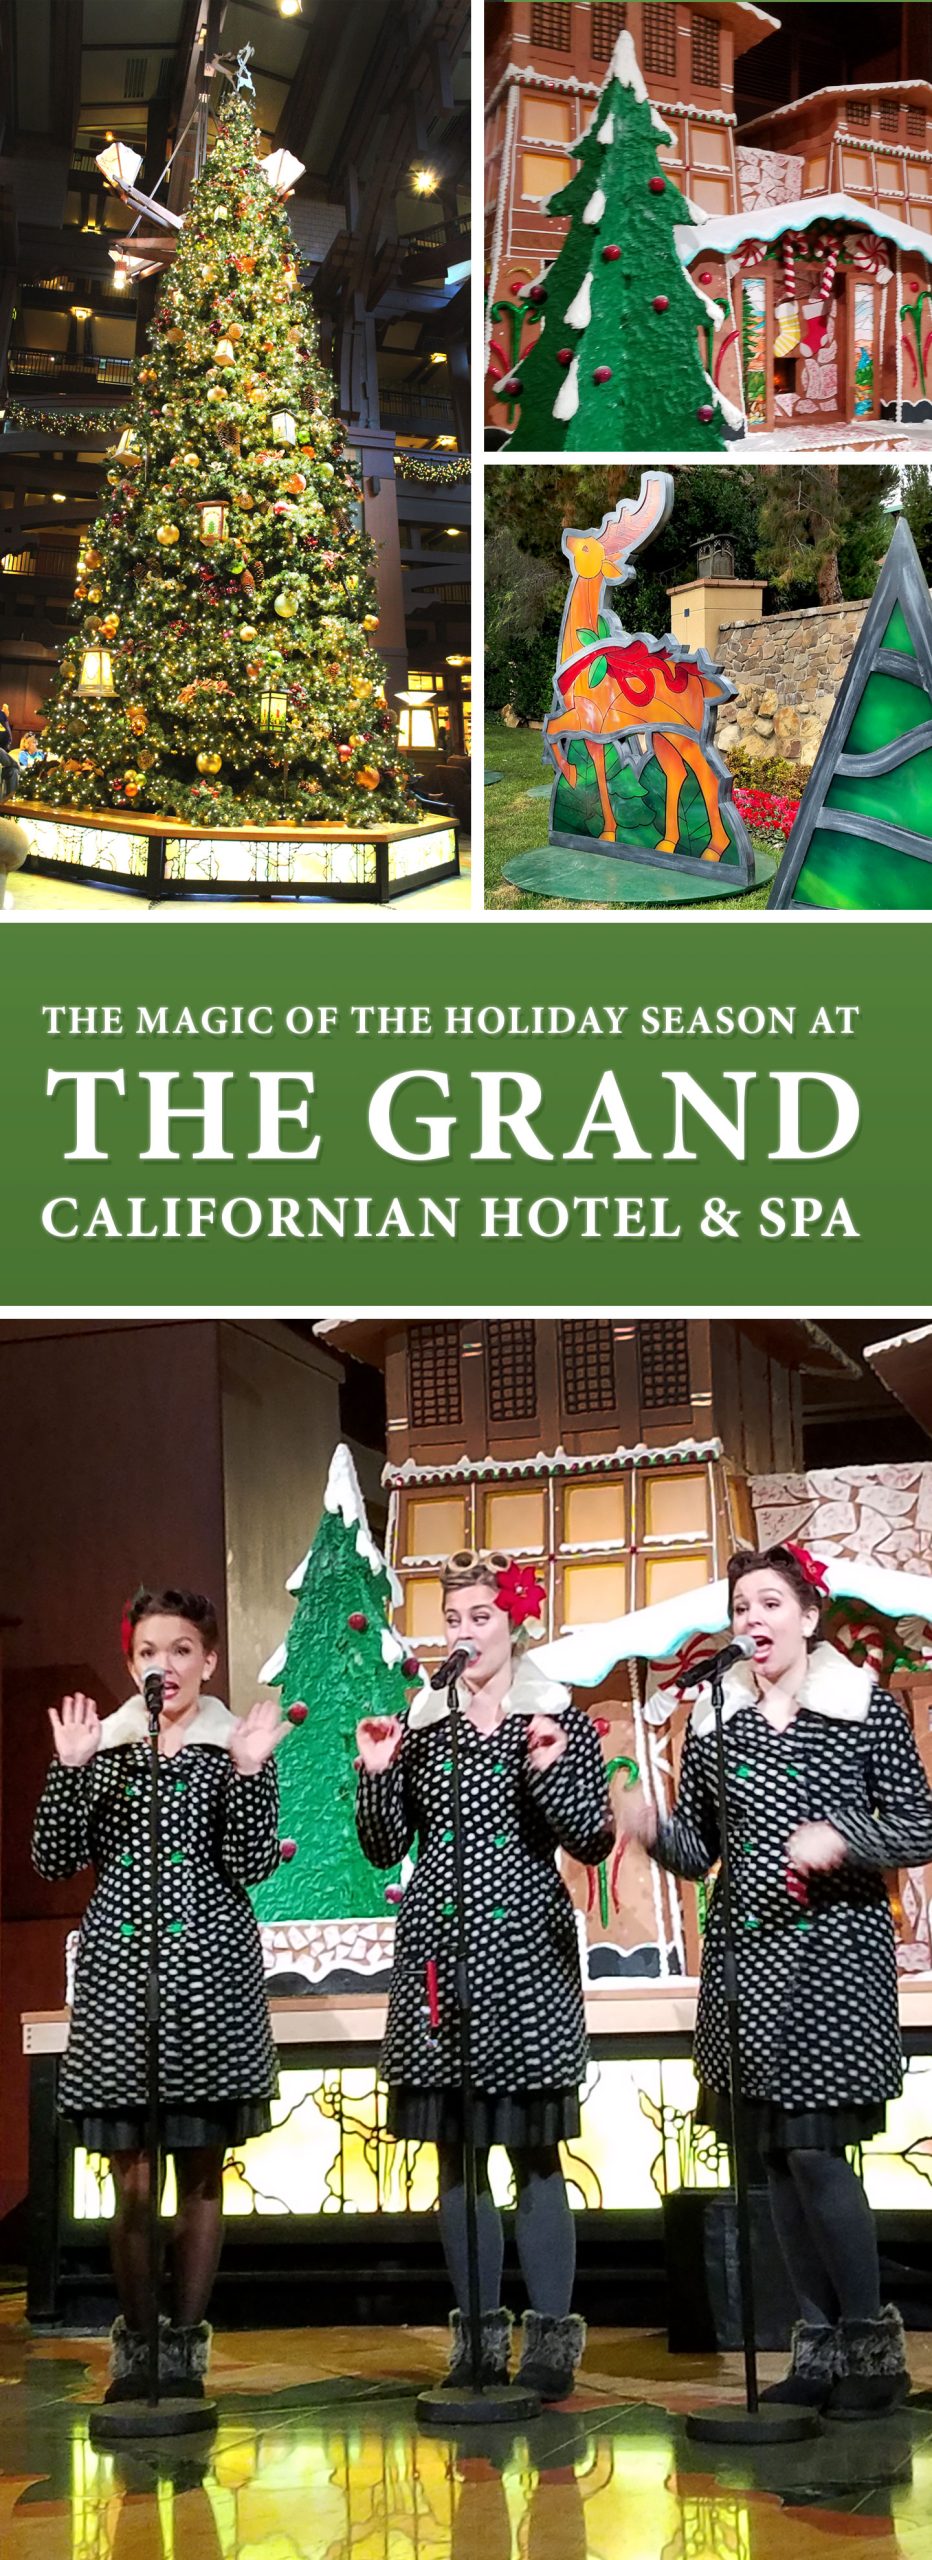 The Grand Californian Hotel & Spa